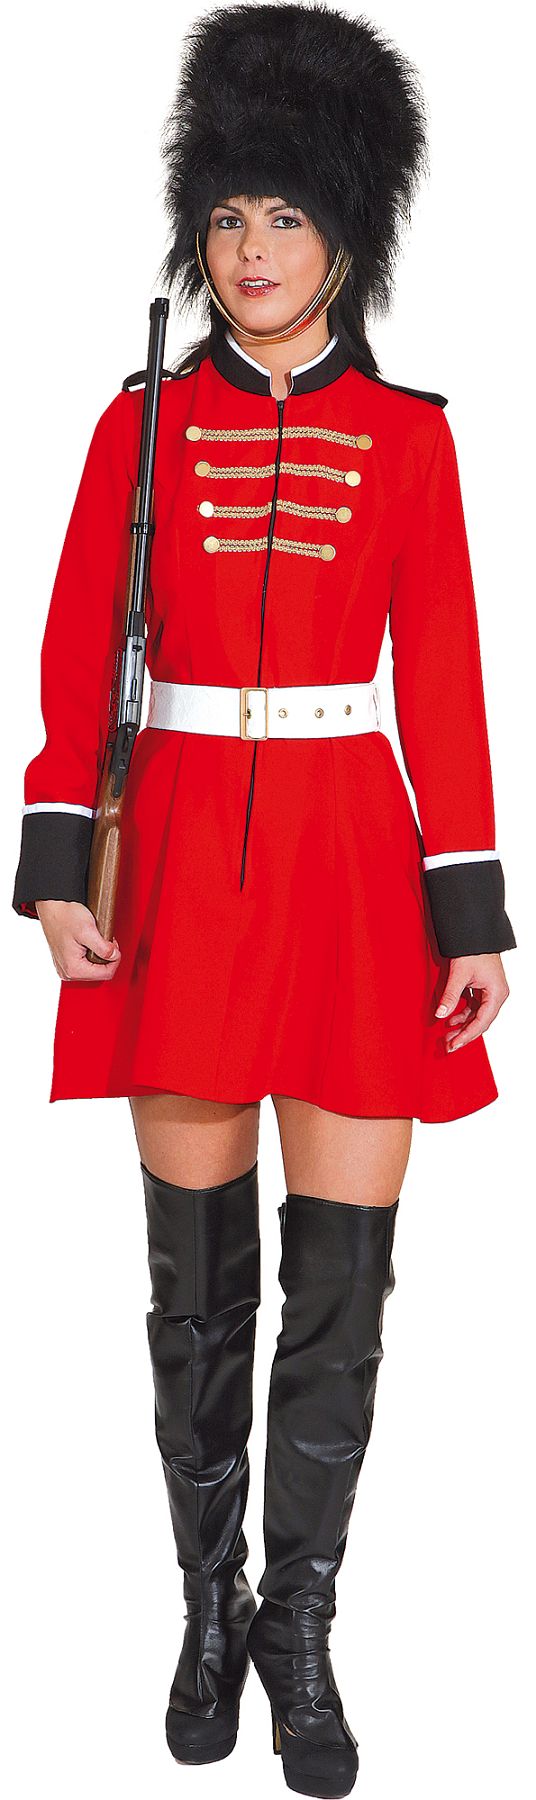 Costume Soldat Garde Royale Femme, rouge-noir